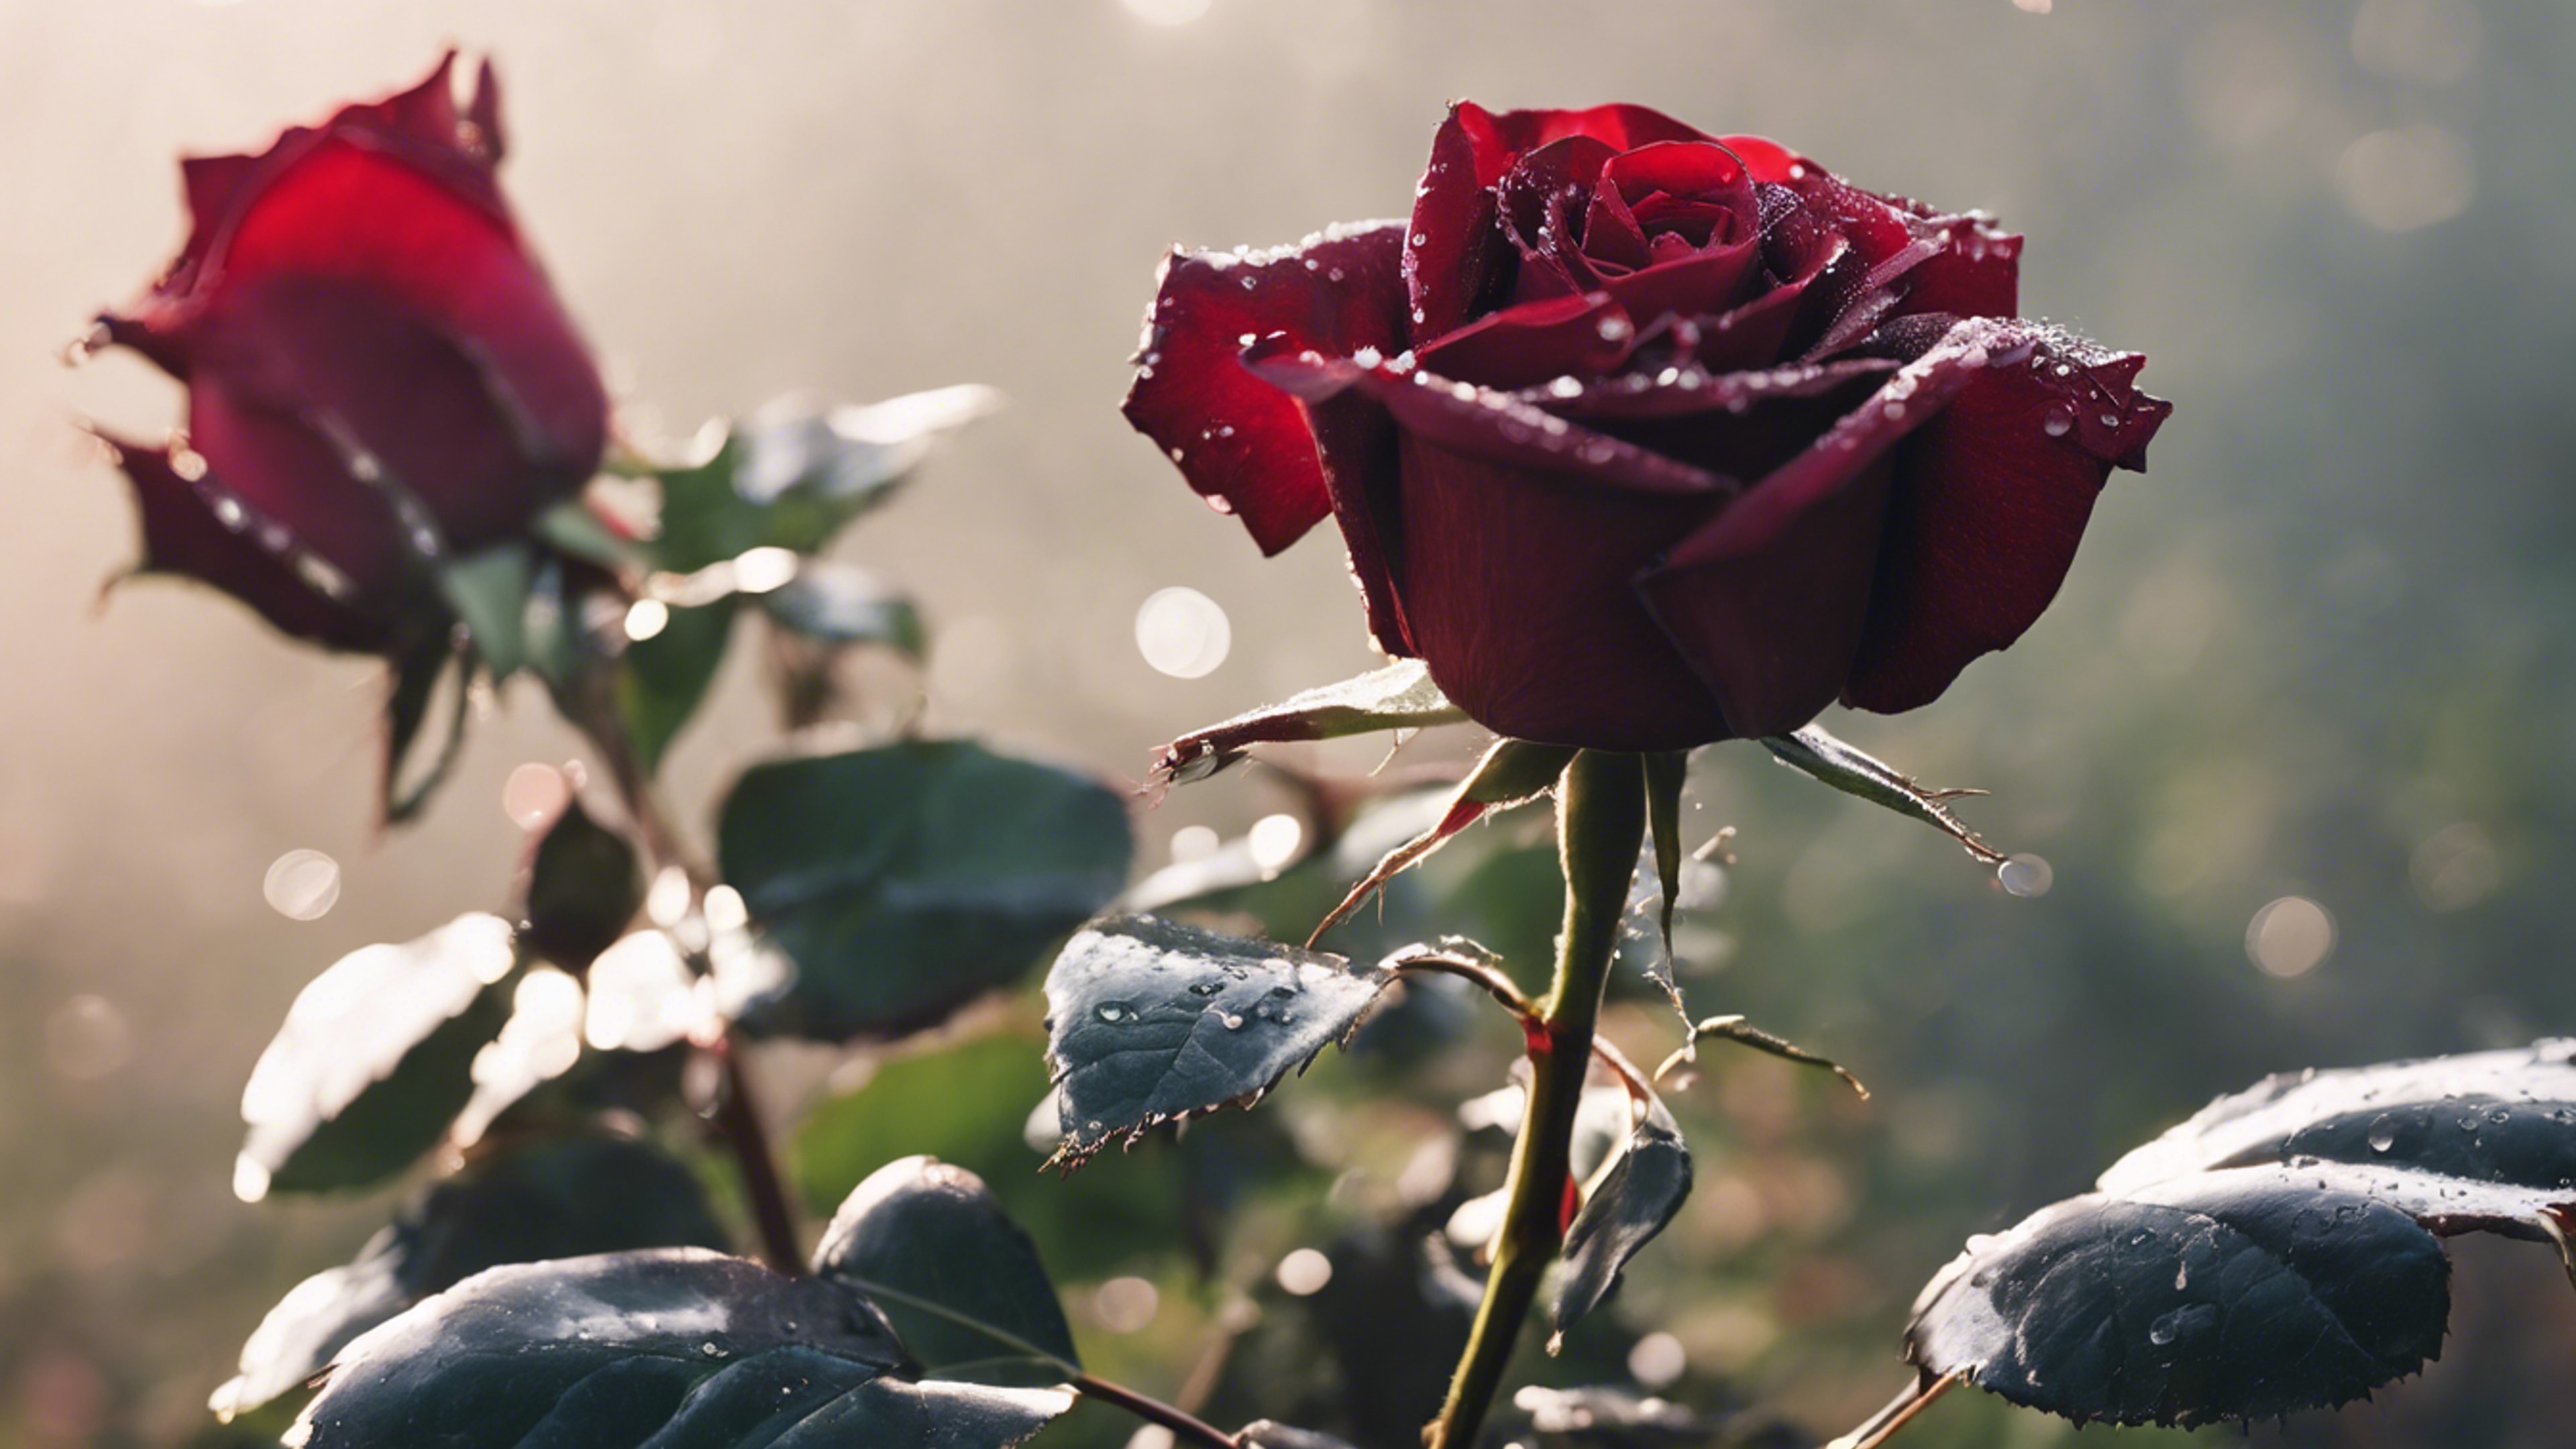 A lush dark red rose in full bloom, glistening with morning dew. Hình nền[3308270db75d4dd78aa2]